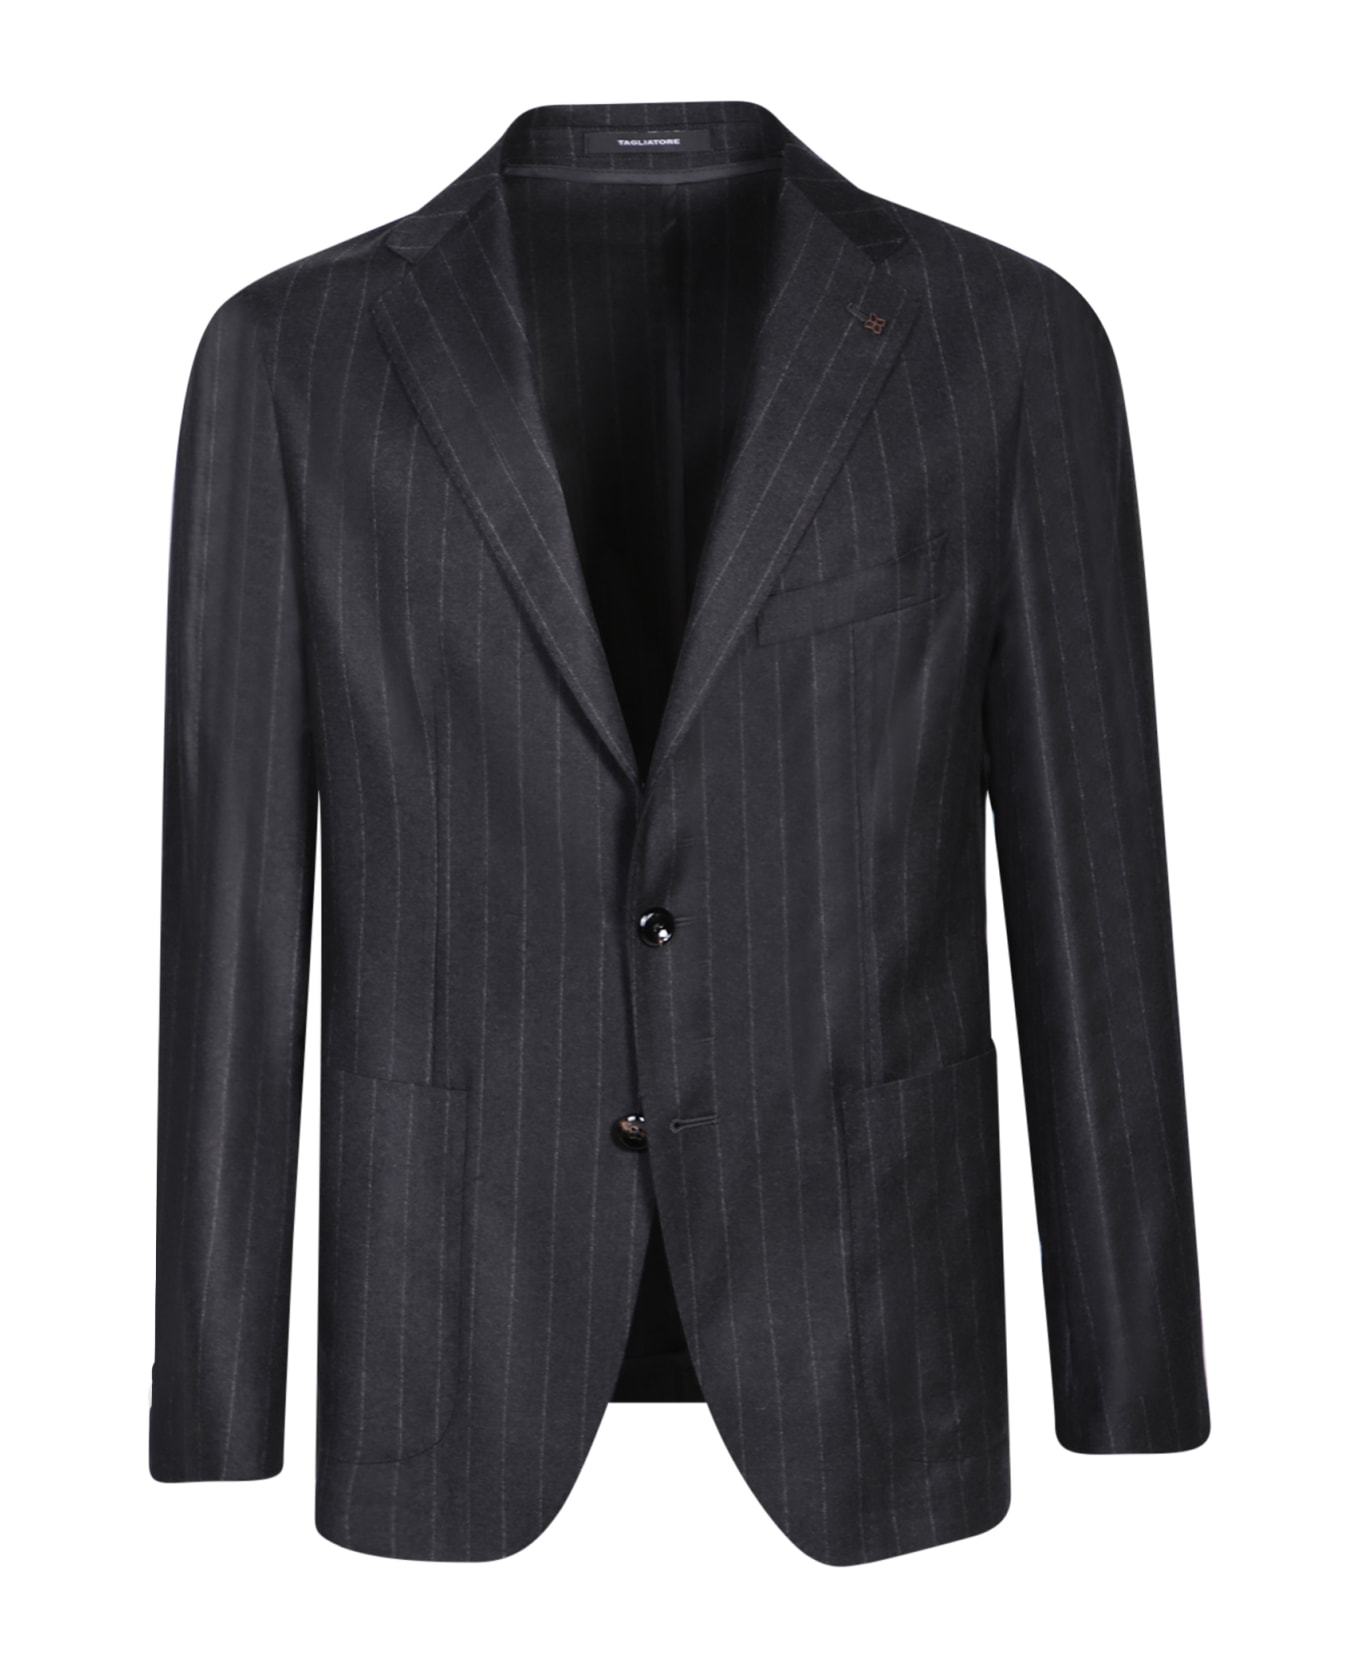 Tagliatore Pinstripe Grey Suit - Grey スーツ